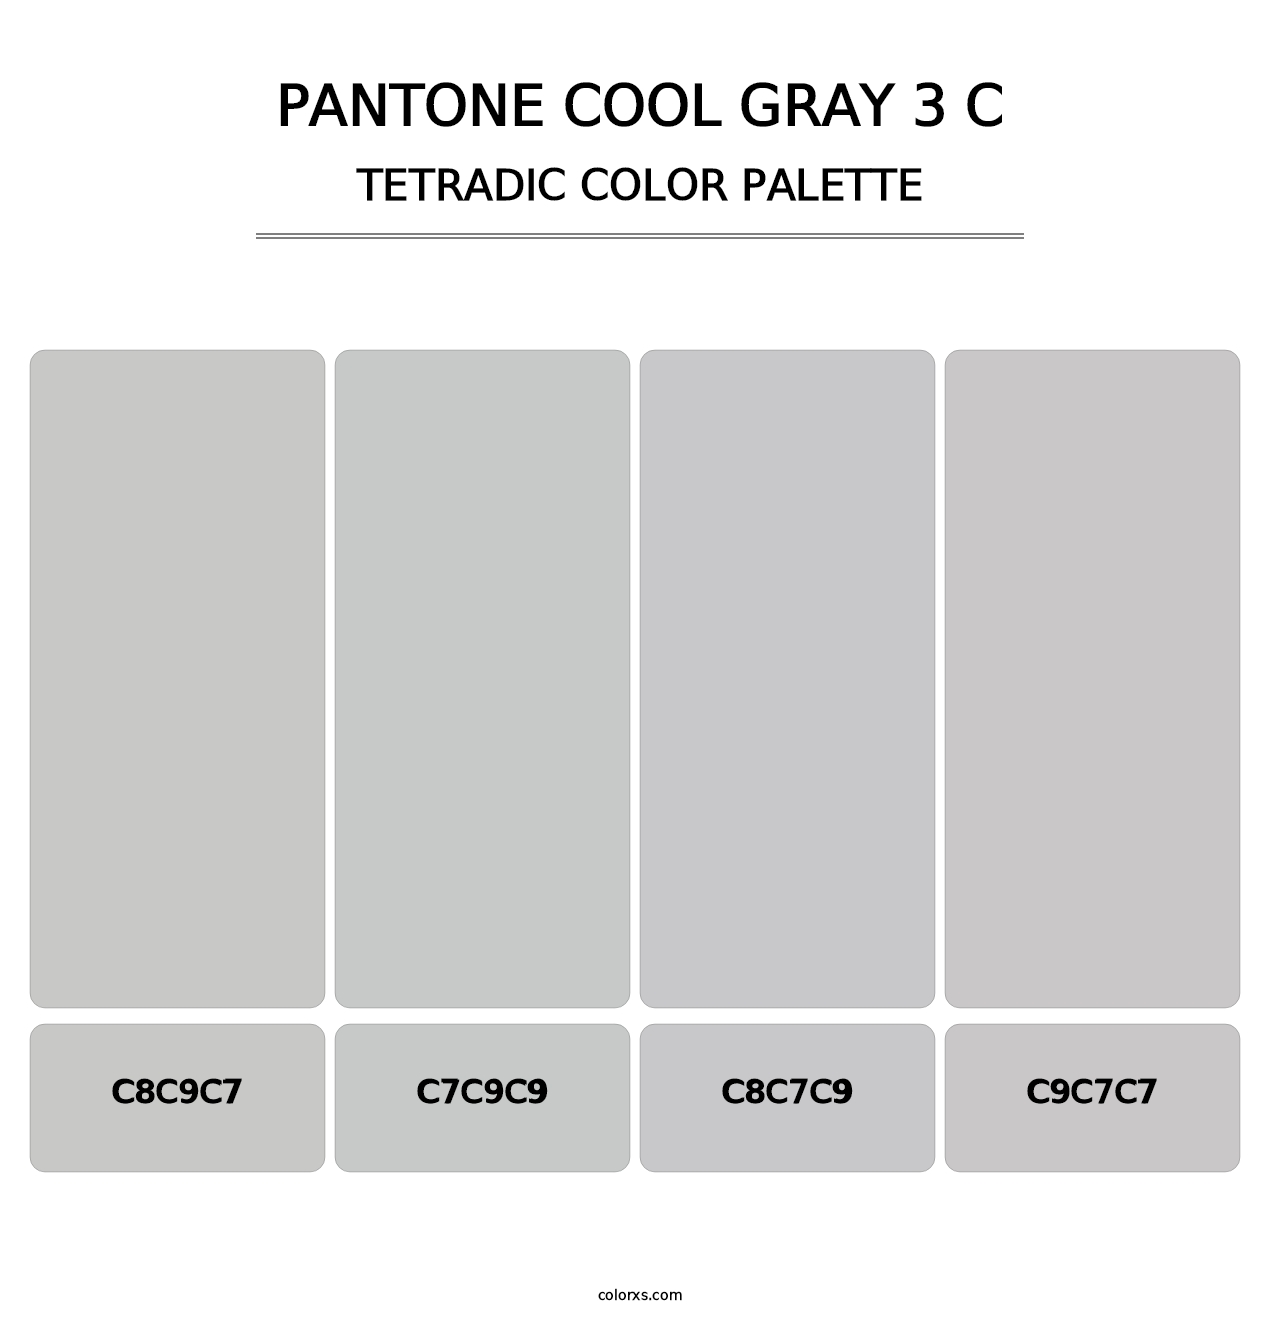 PANTONE Cool Gray 3 C - Tetradic Color Palette